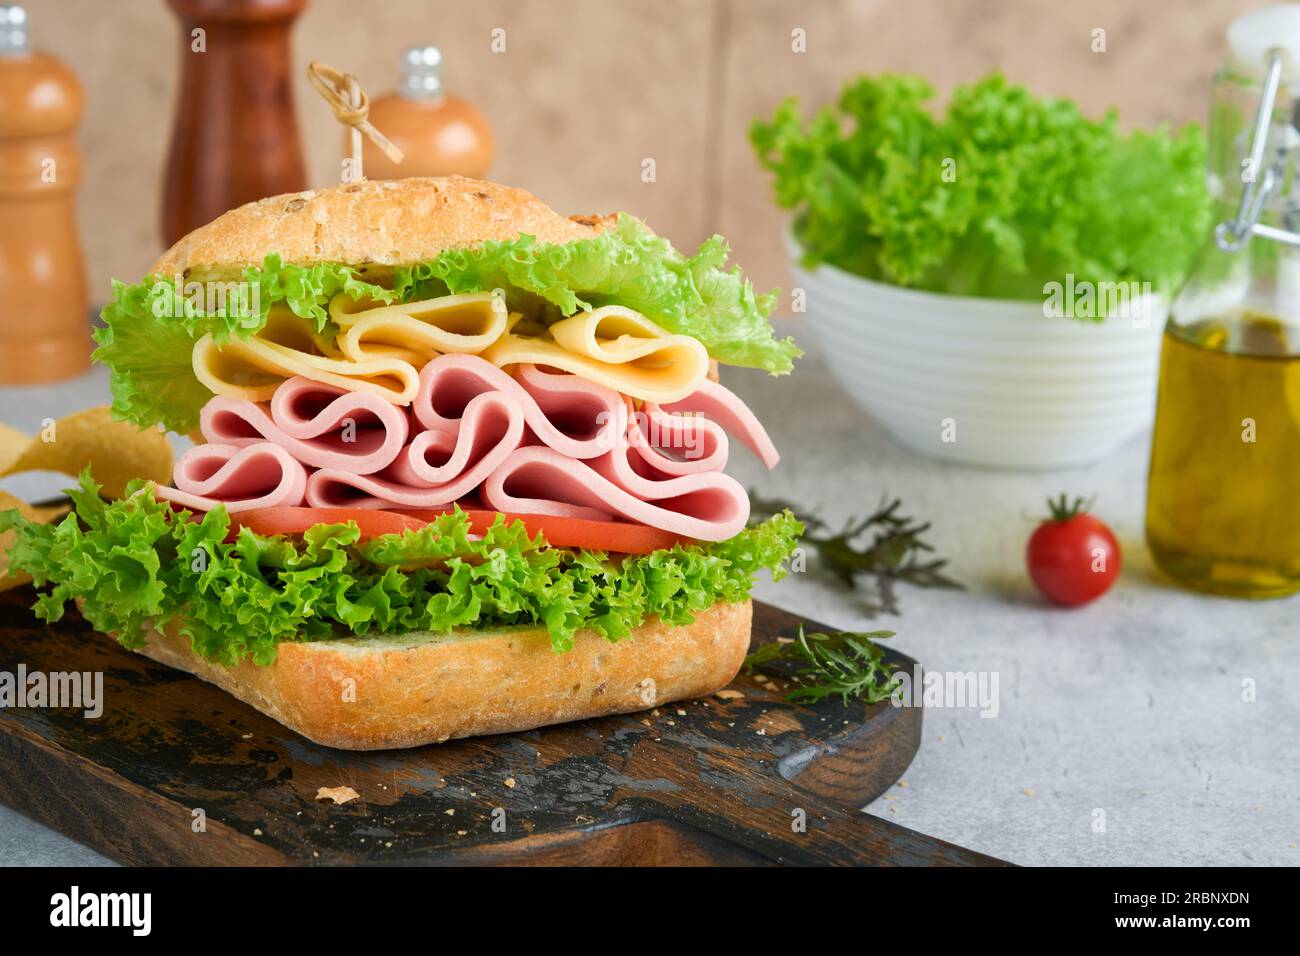 https://c8.alamy.com/comp/2RBNXDN/sandwich-tasty-sandwich-with-ham-or-bacon-cheese-tomatoes-lettuce-and-grain-bread-delicious-club-sandwich-or-school-lunch-breakfast-or-snack-2RBNXDN.jpg